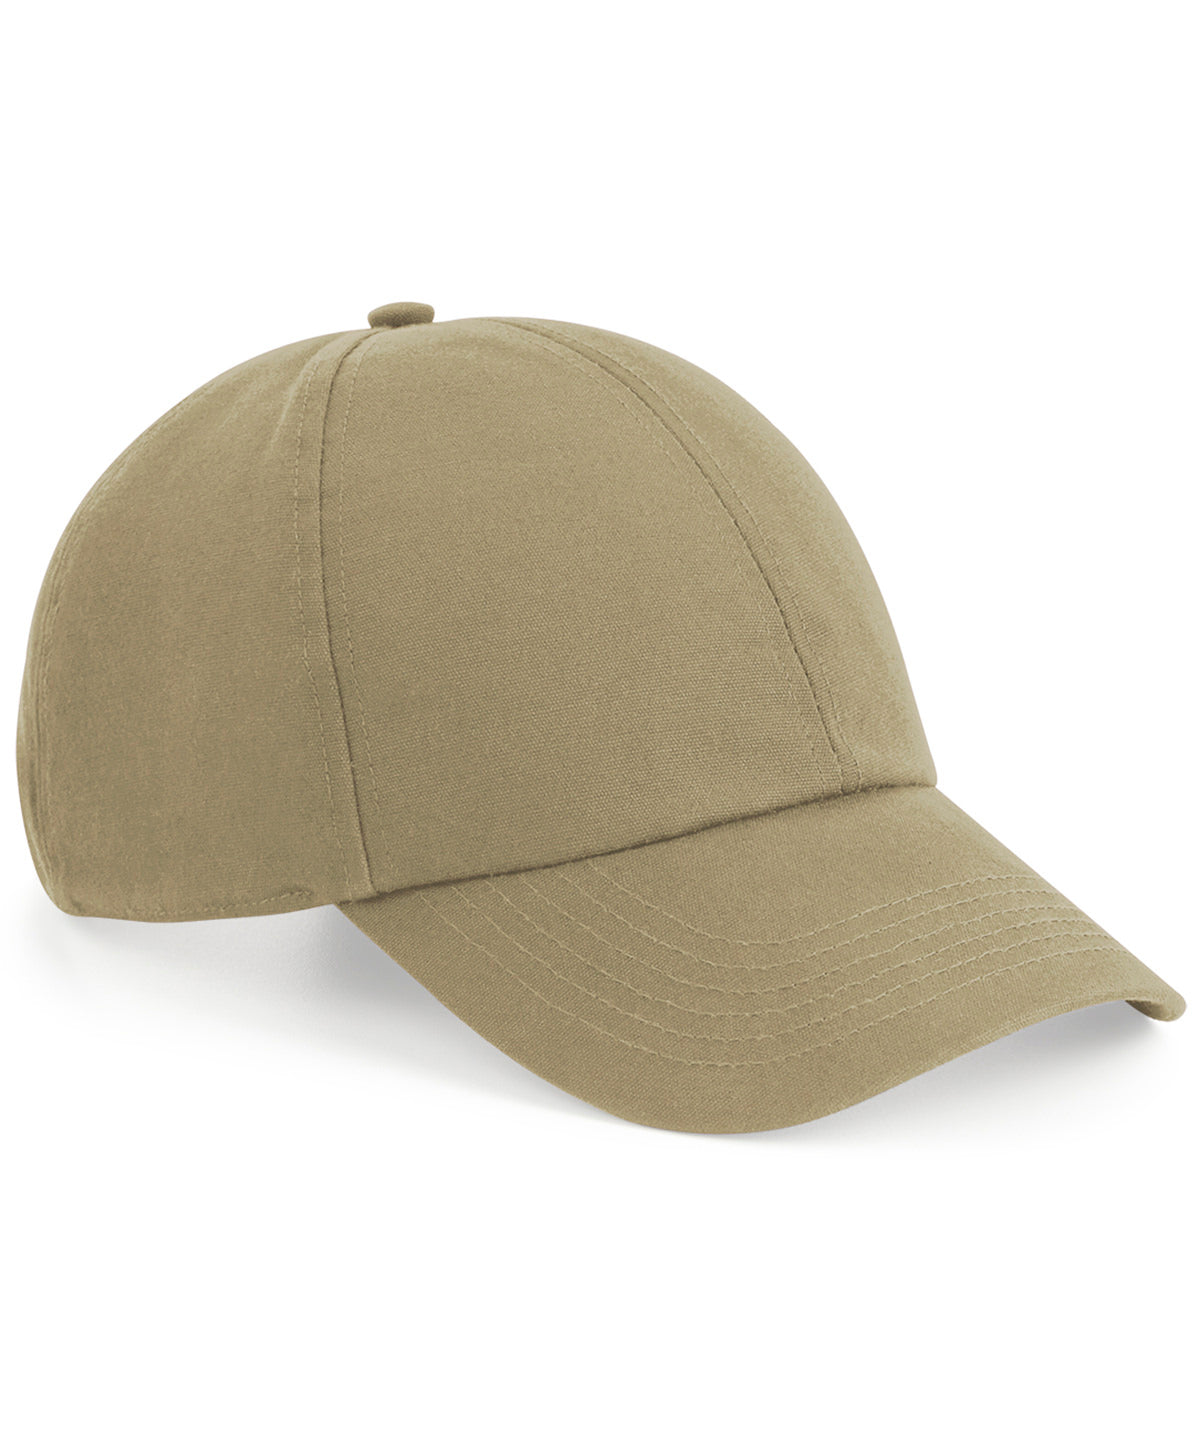 Personalised Caps - Natural Beechfield Organic cotton 6-panel cap